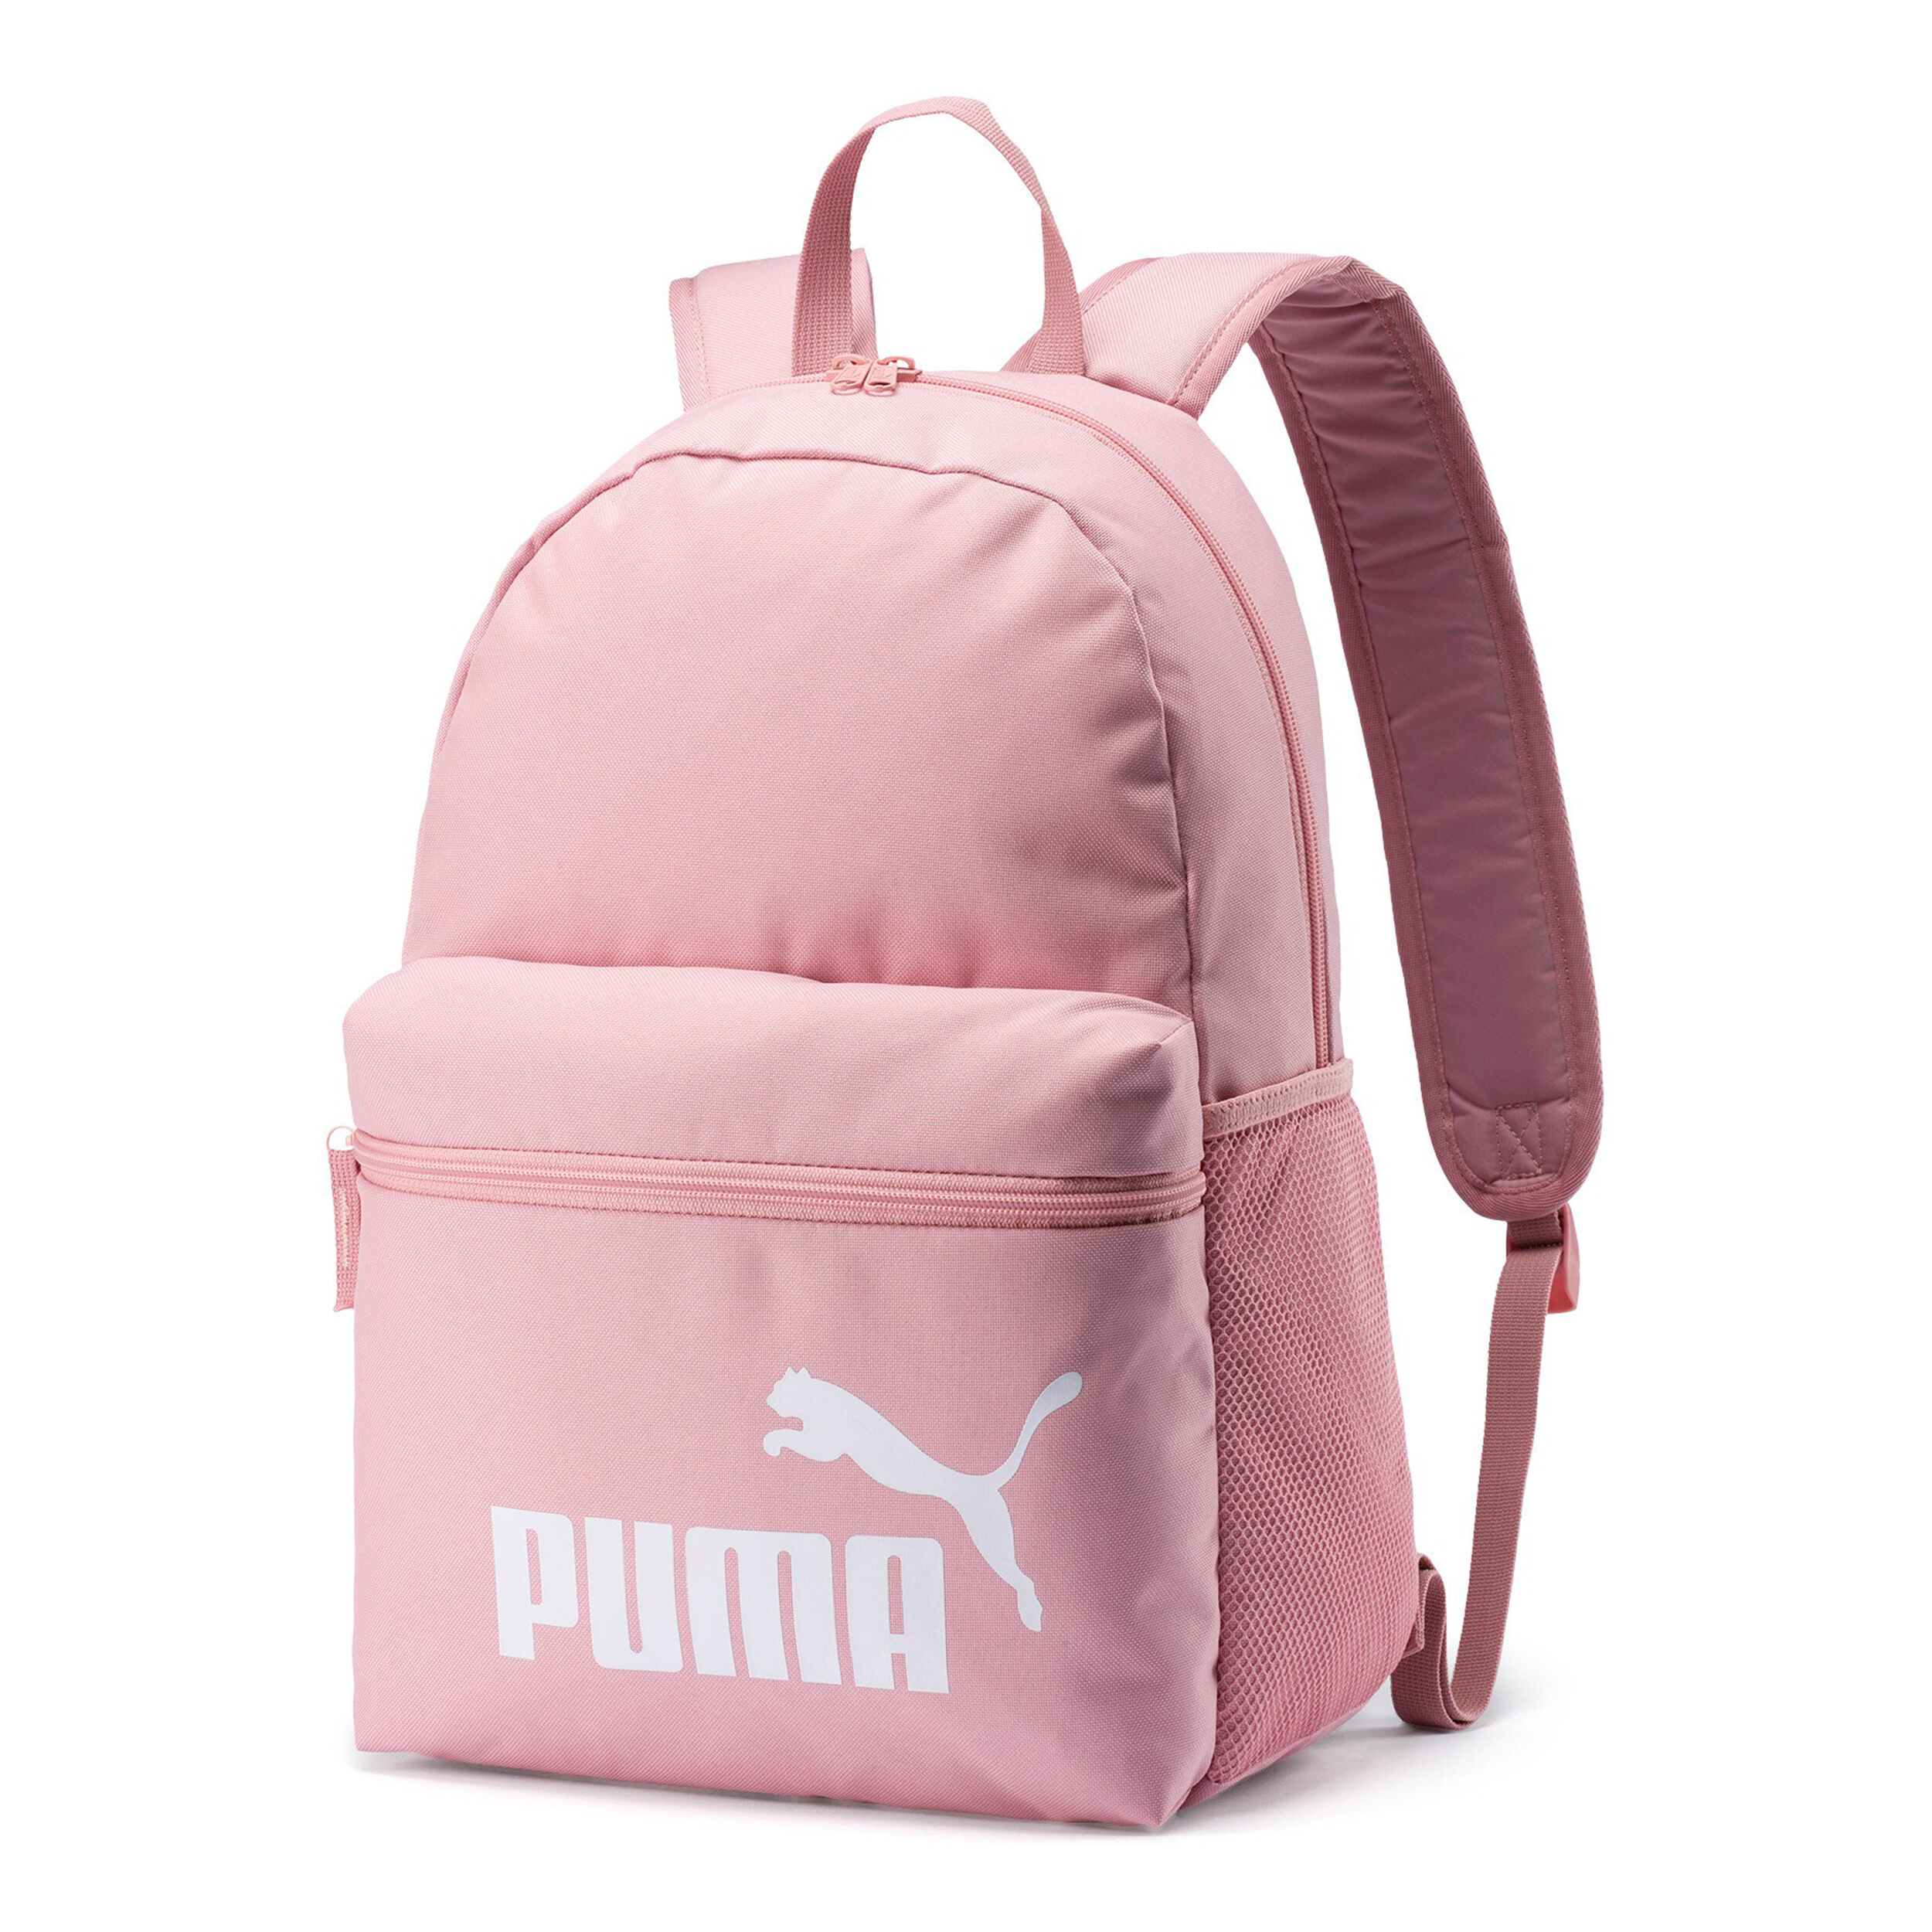 Puma Unisex-Adult Zipper Backpack, Sunset Glow (9018505) : Amazon.in:  Fashion